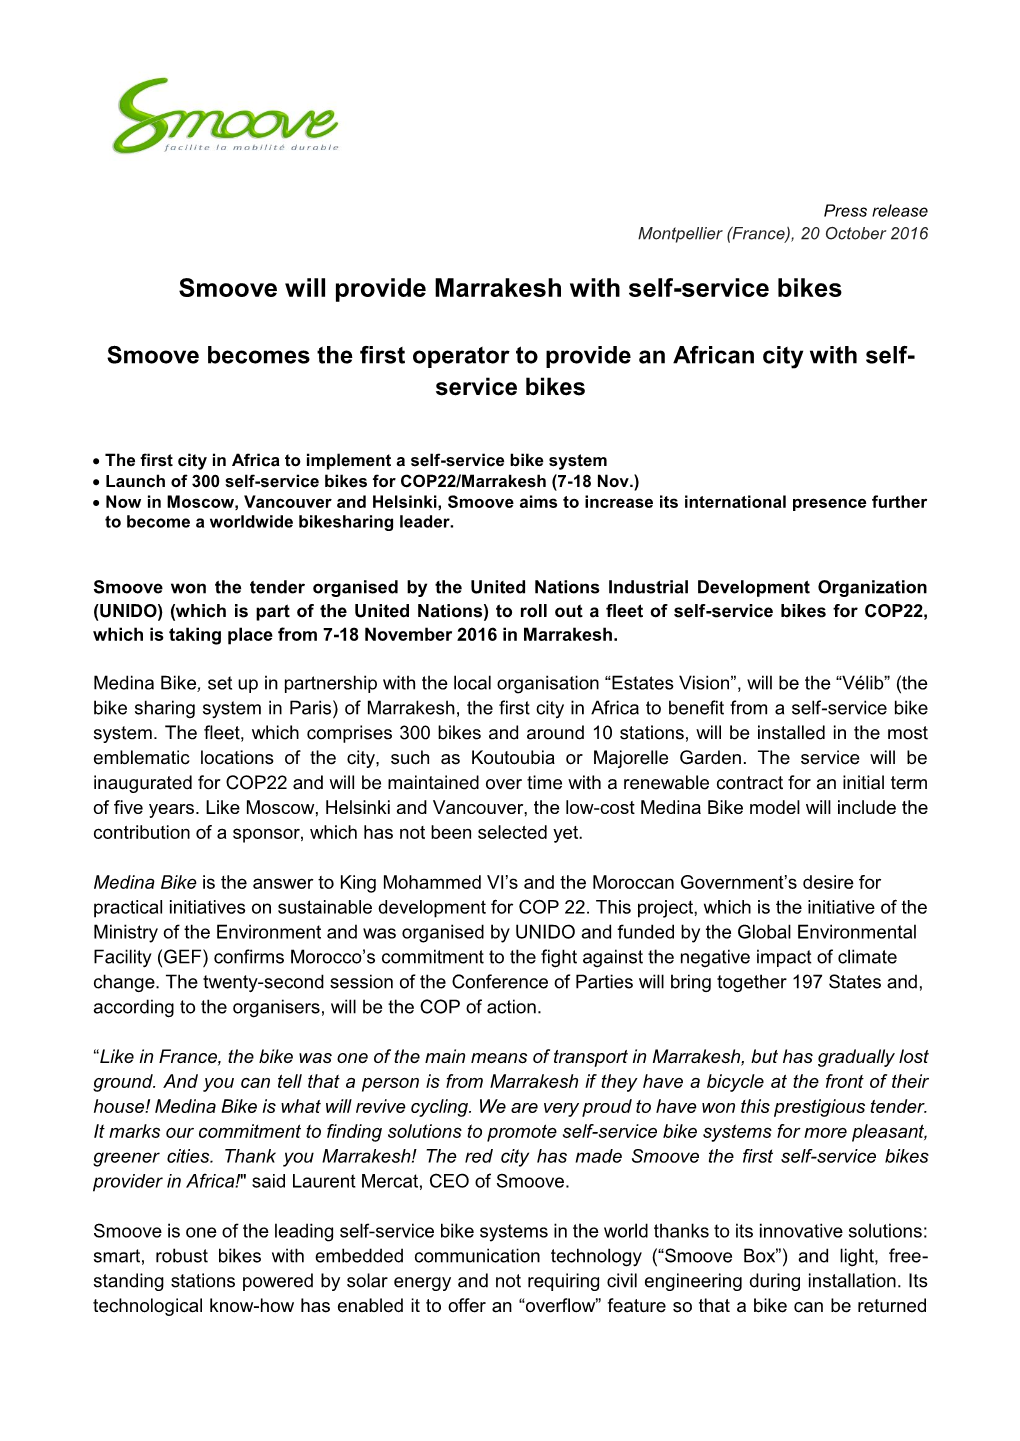 Smoove Will Provide Marrakesh with Self-Service Bikes